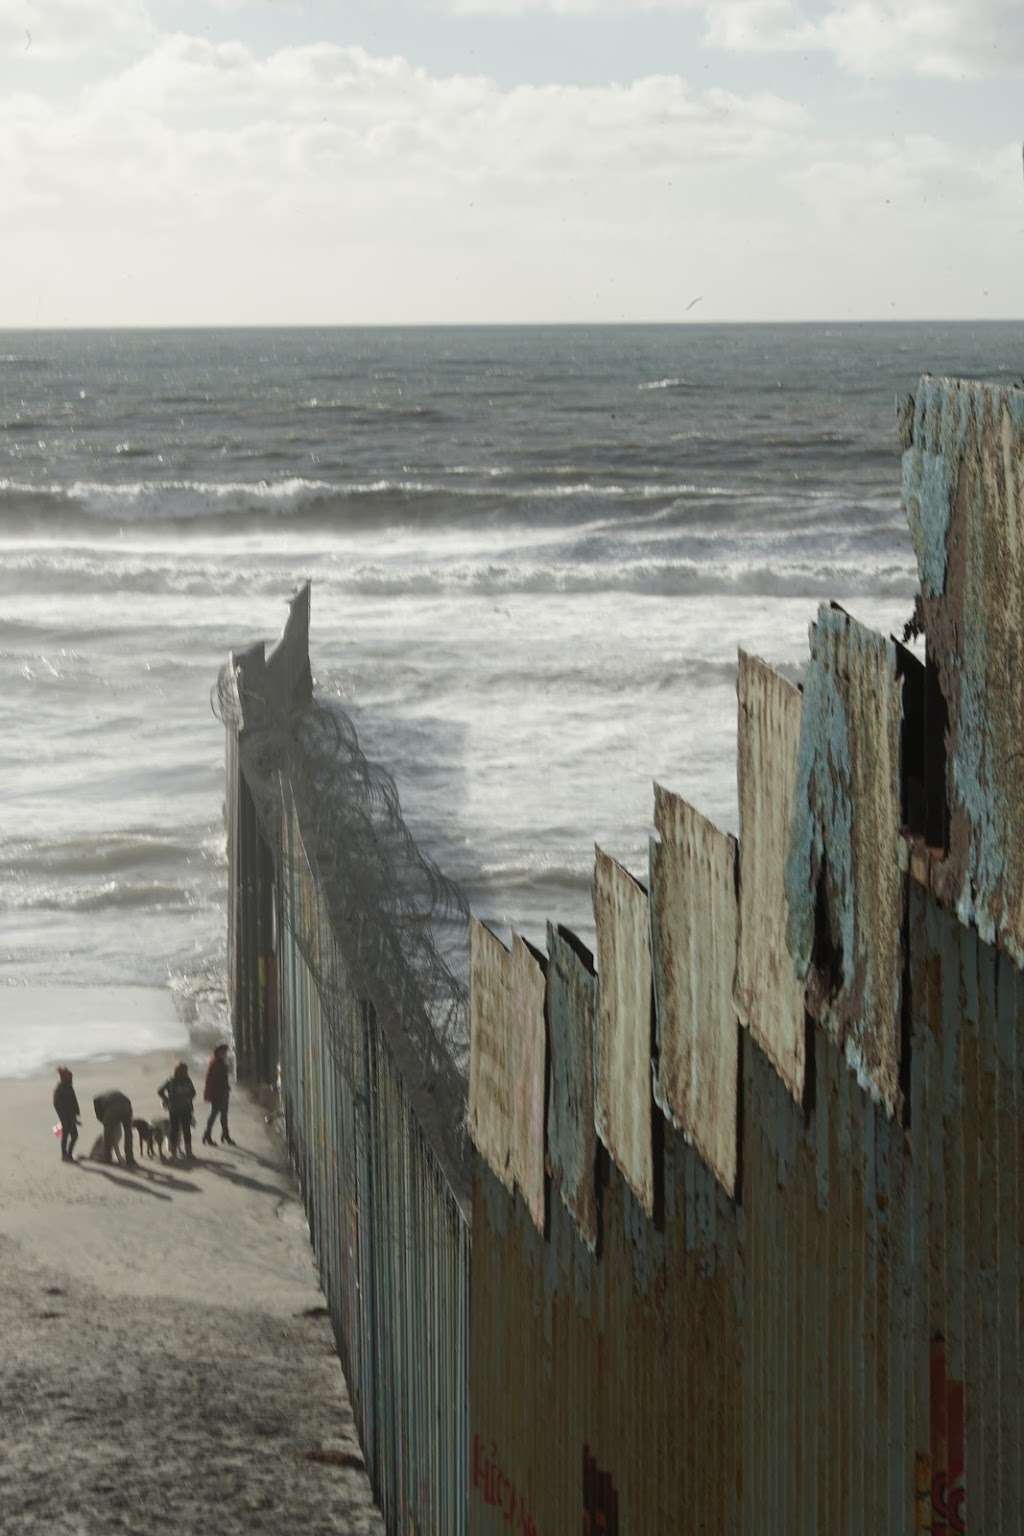 El Muro en la Playa, Tijuana | Faro, Monumental, Tijuana, B.C.